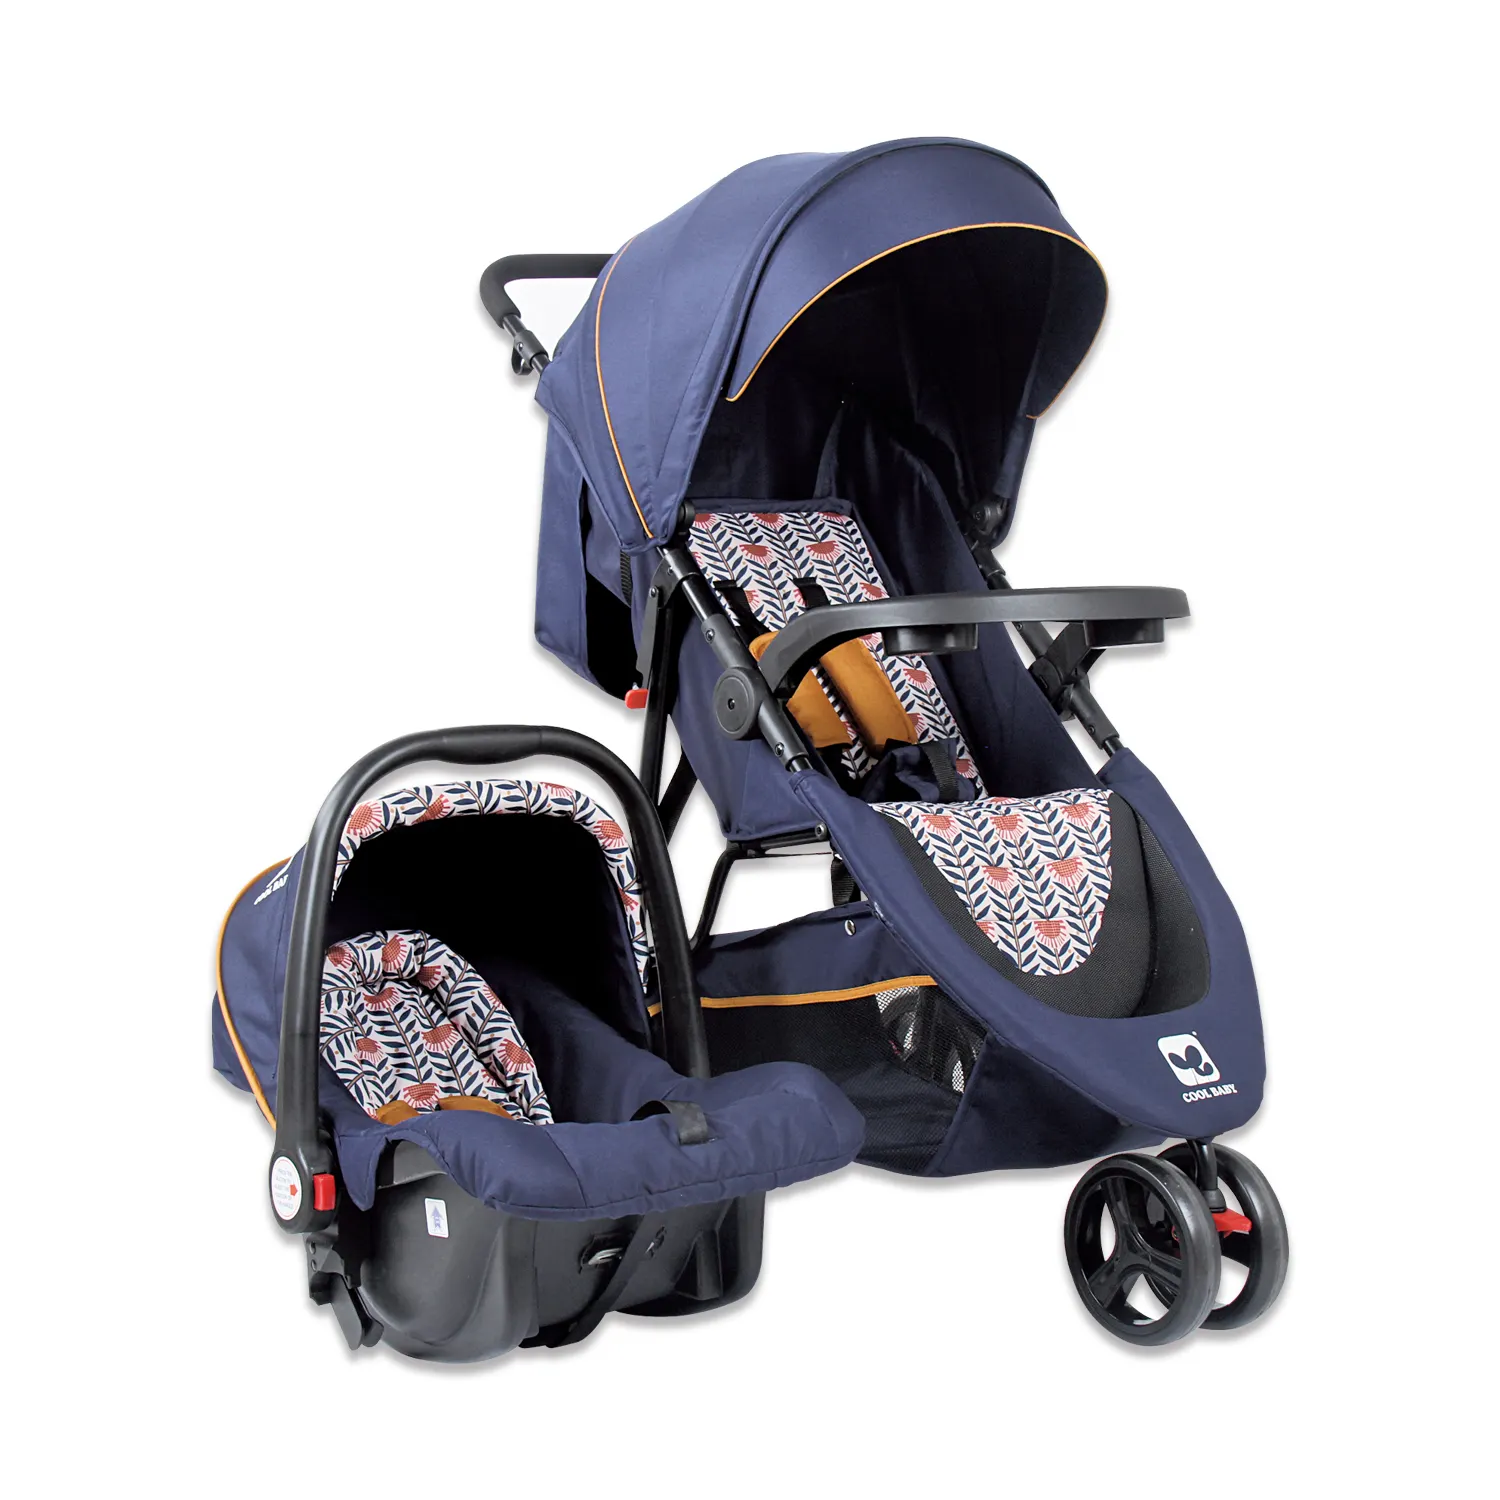 Cool Baby-Sistema de viaje para cochecito de bebé, carrier ligero